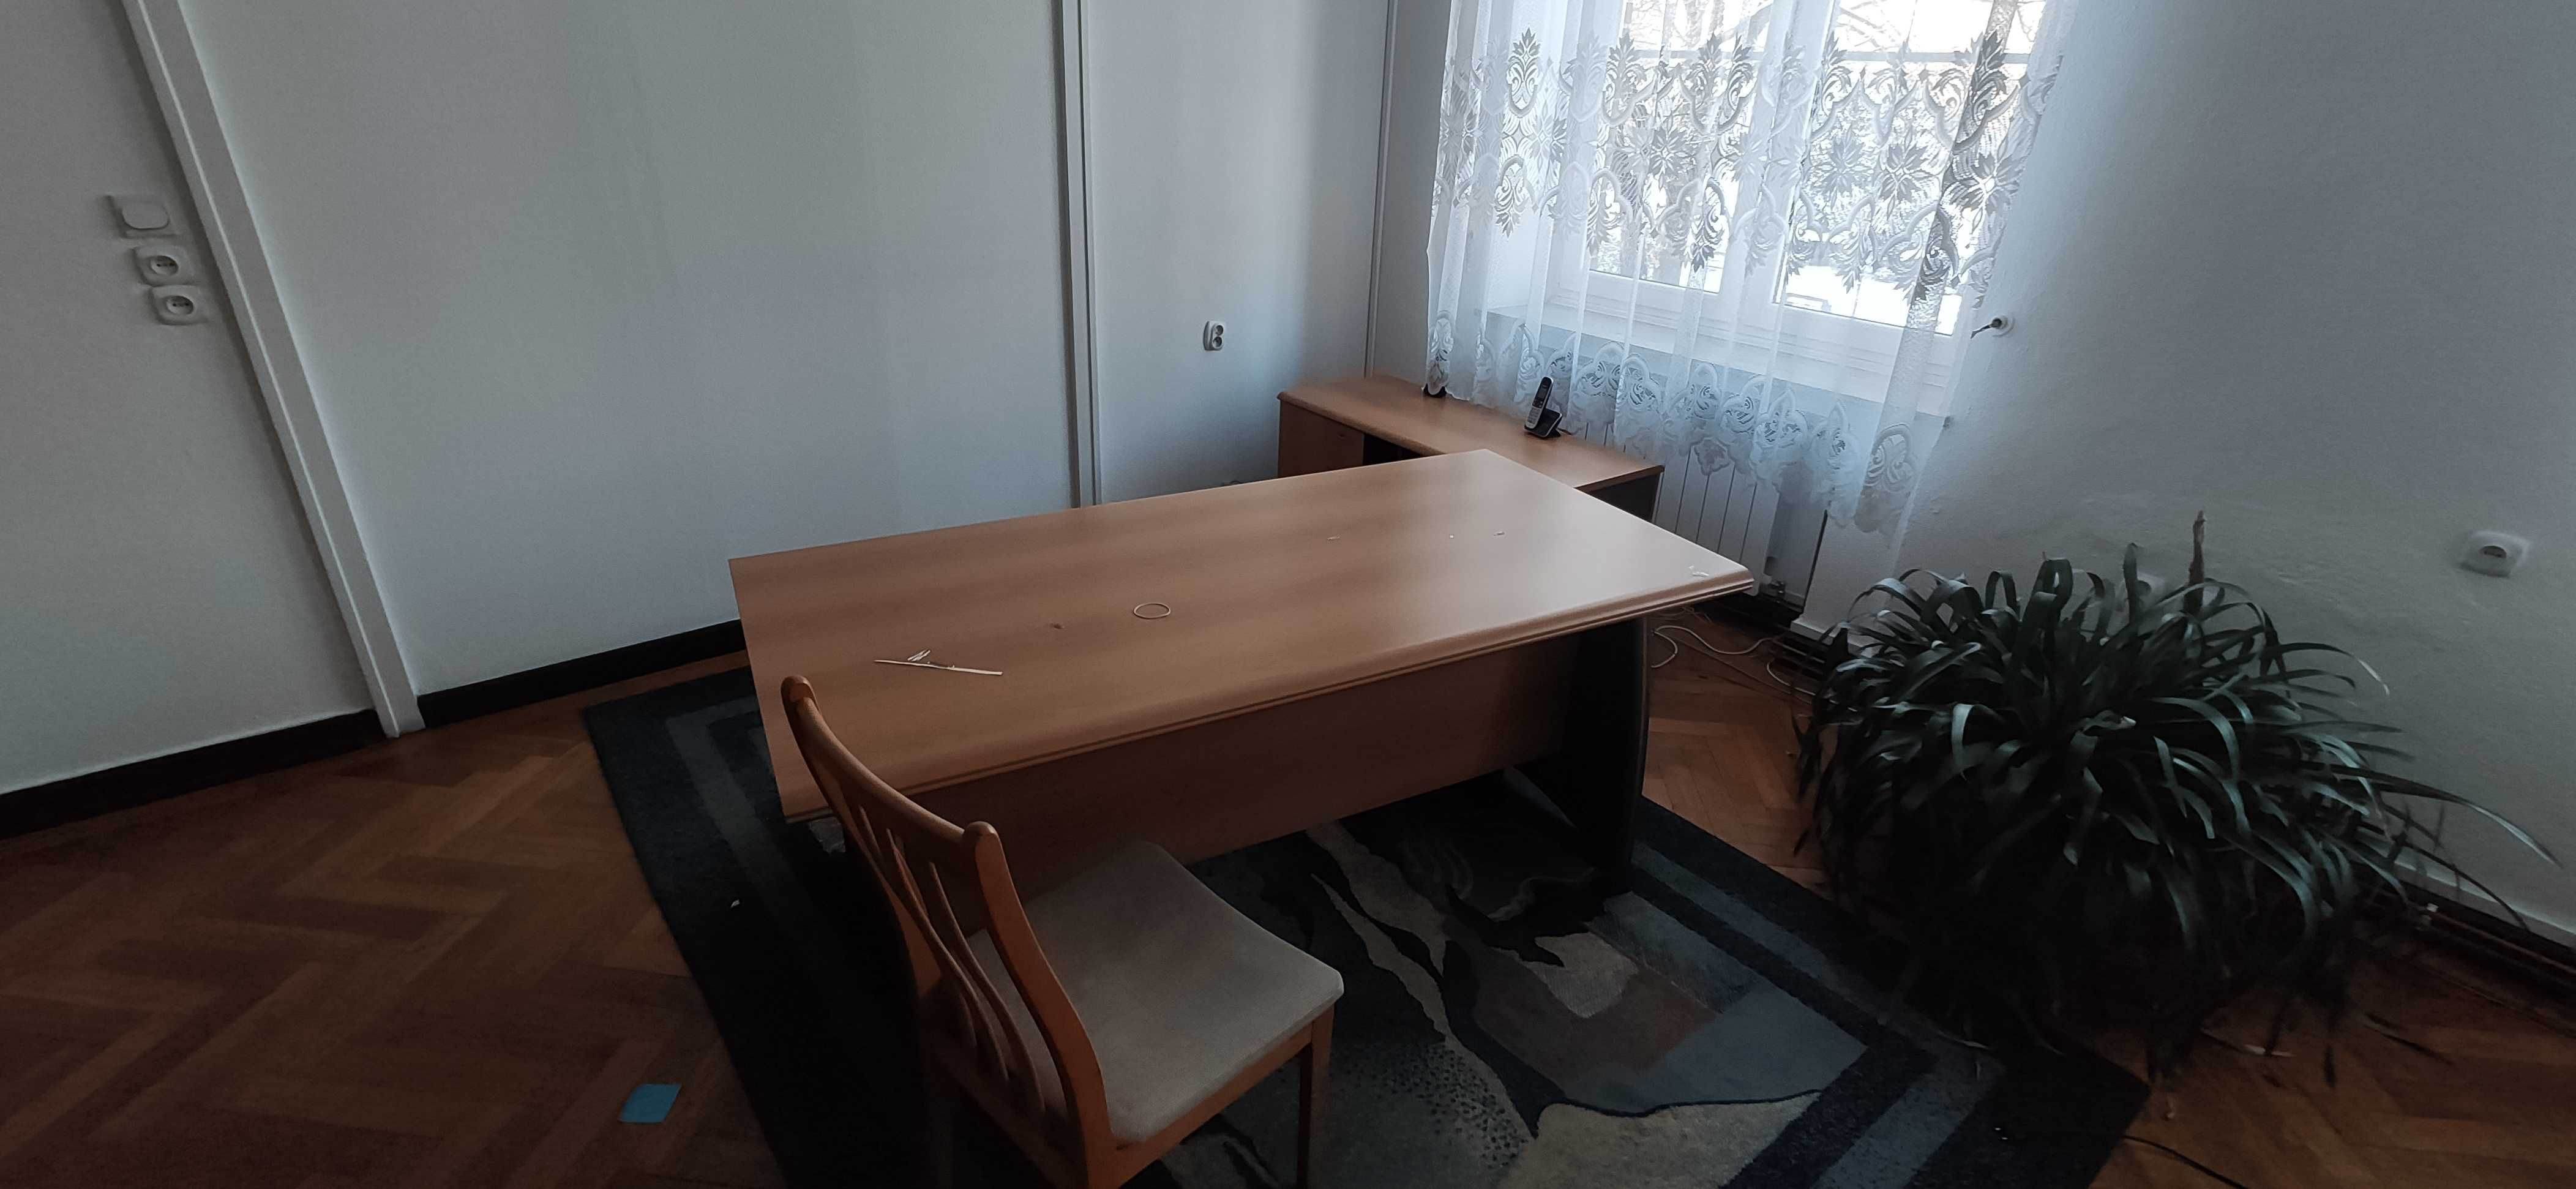 Meble biurowe - biurko, krzesła